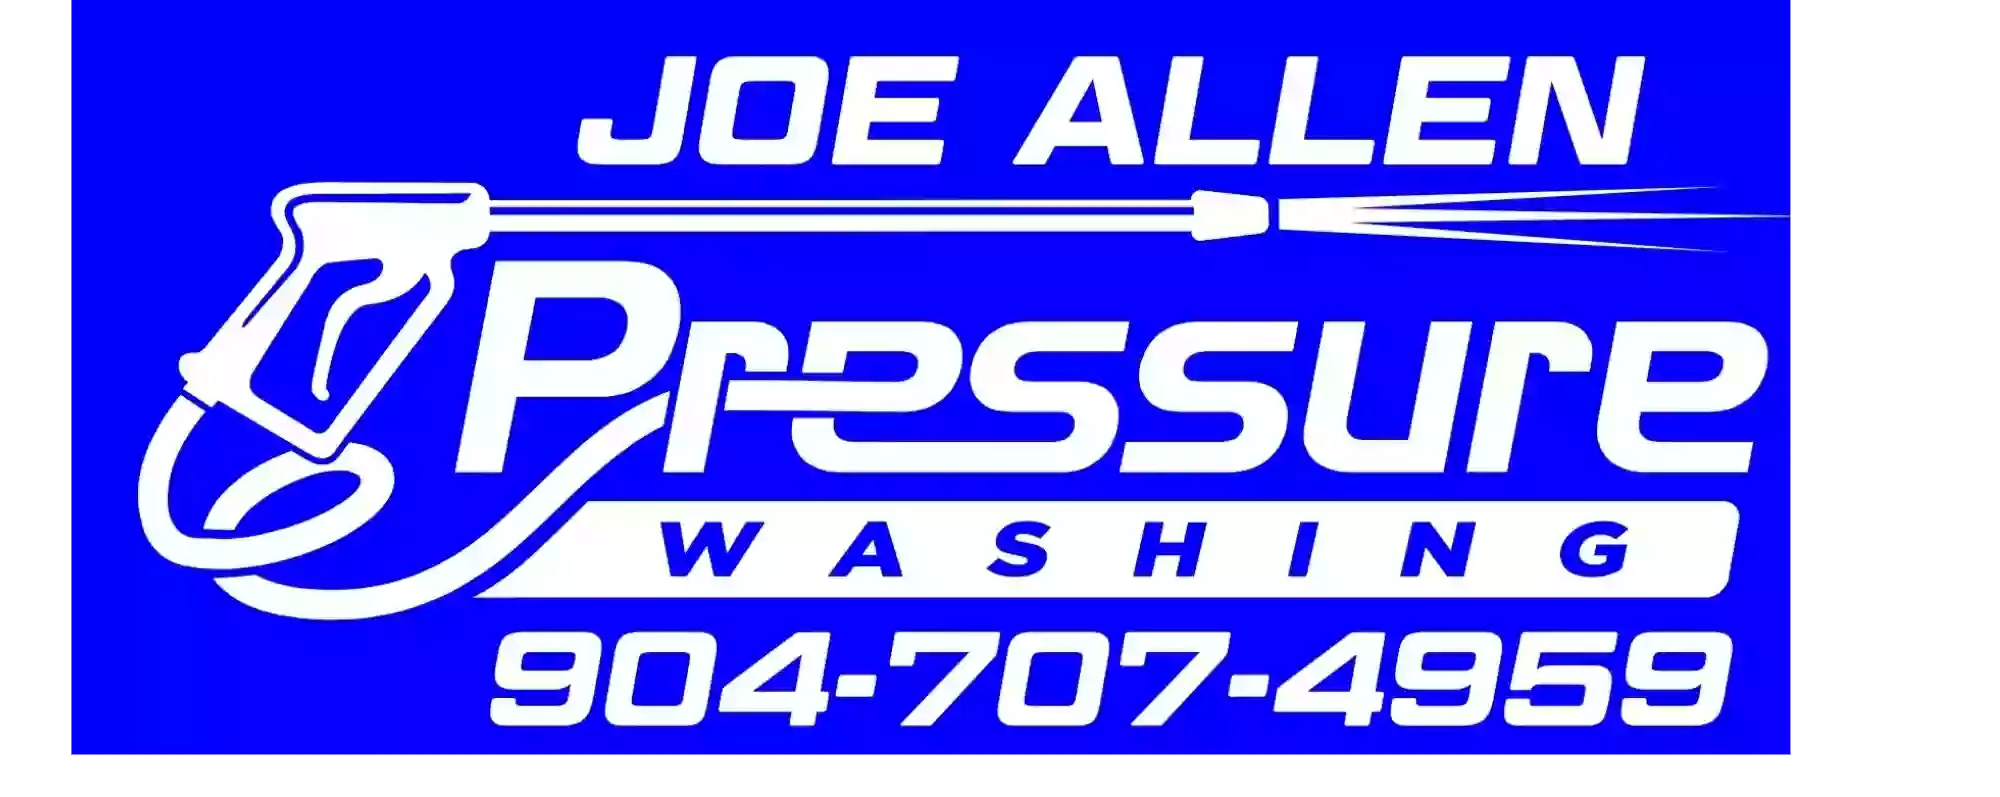 Joe Allen Pressure Washing LLC